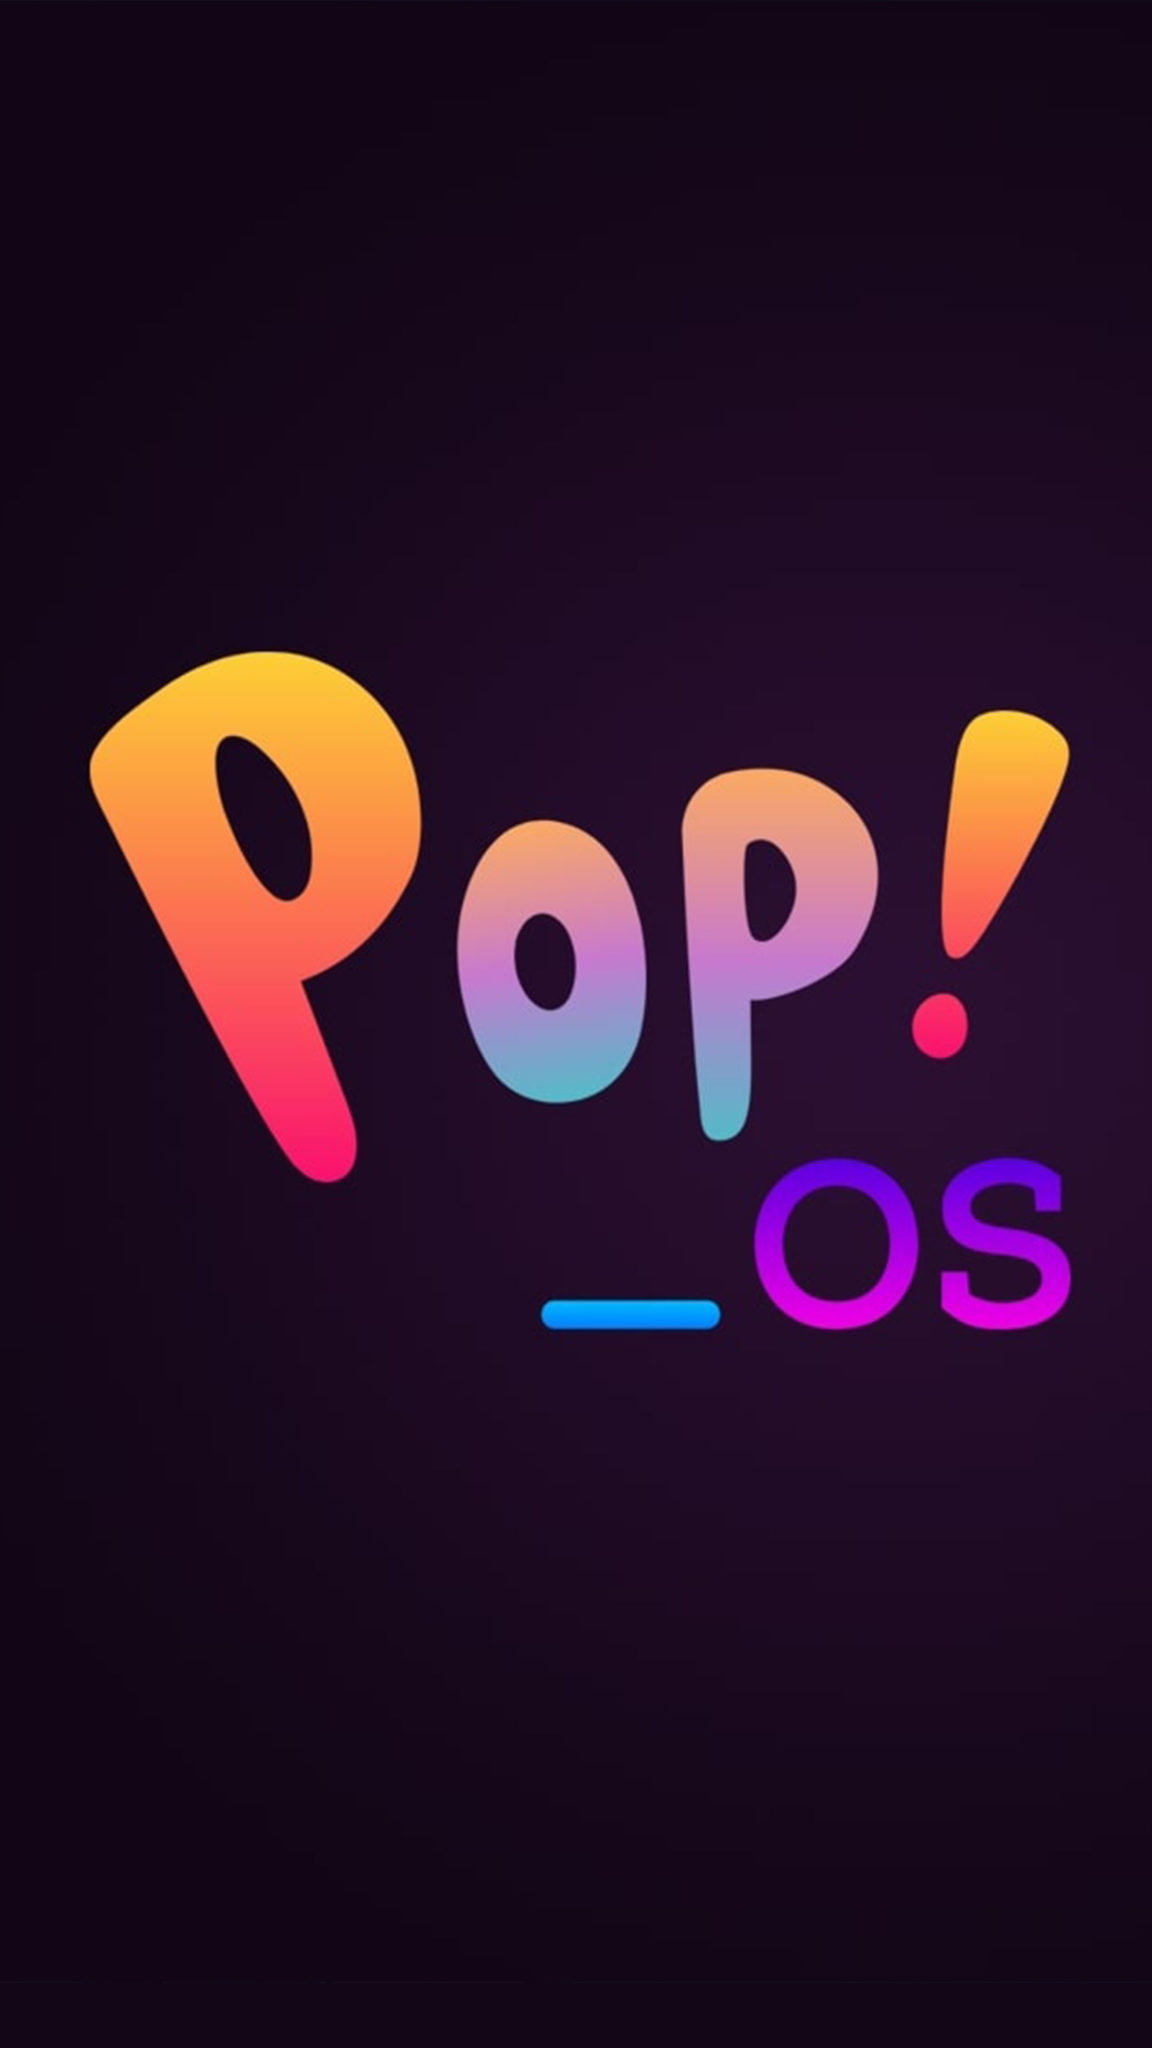 backgrounds that make logo pop